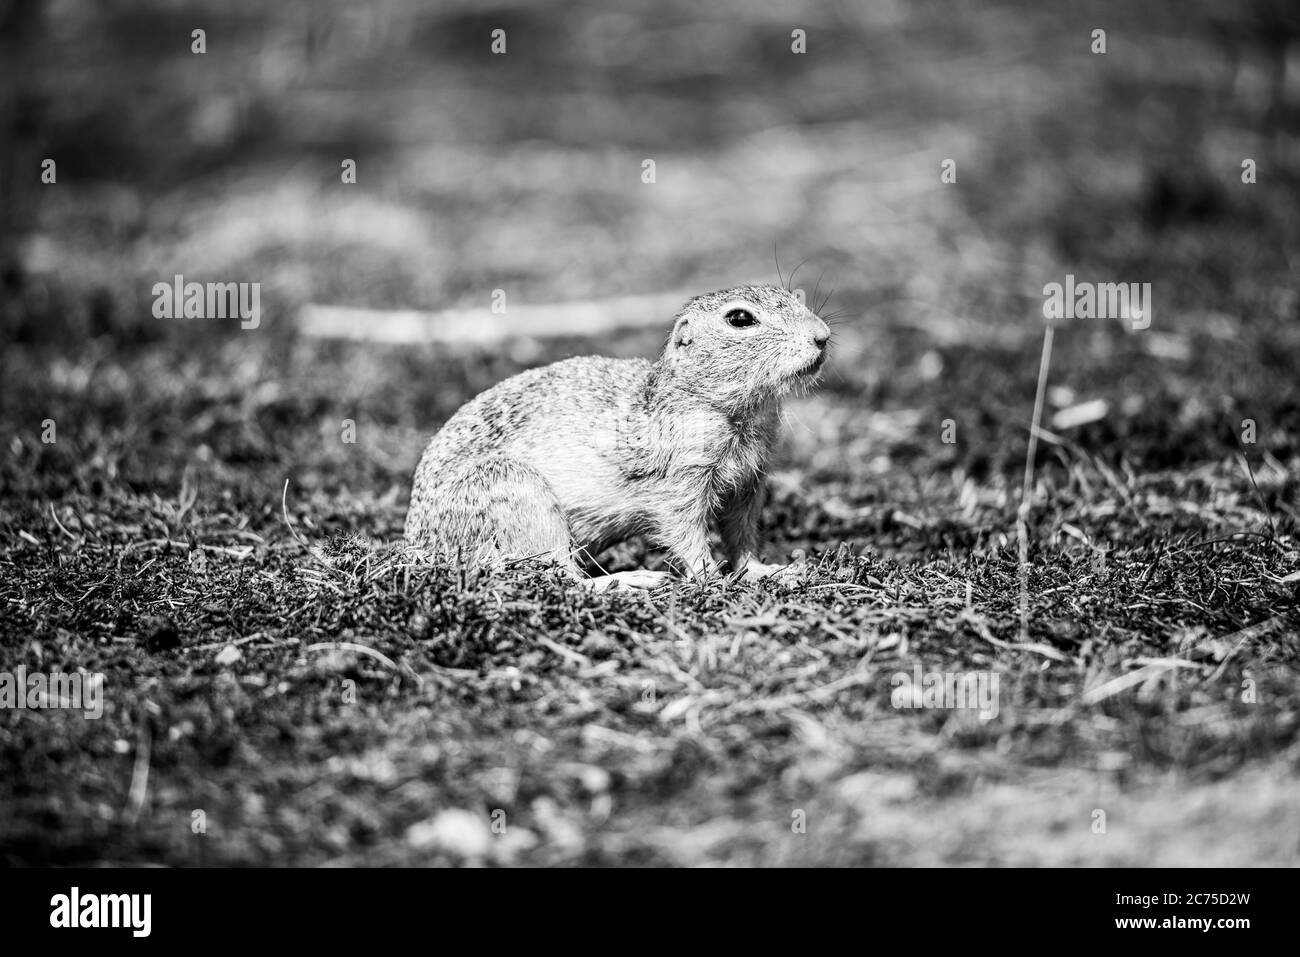 European ground squirrel, Spermophilus citellus, aka European souslik. Small cute rodent in natural habitat. Black and white image. Stock Photo